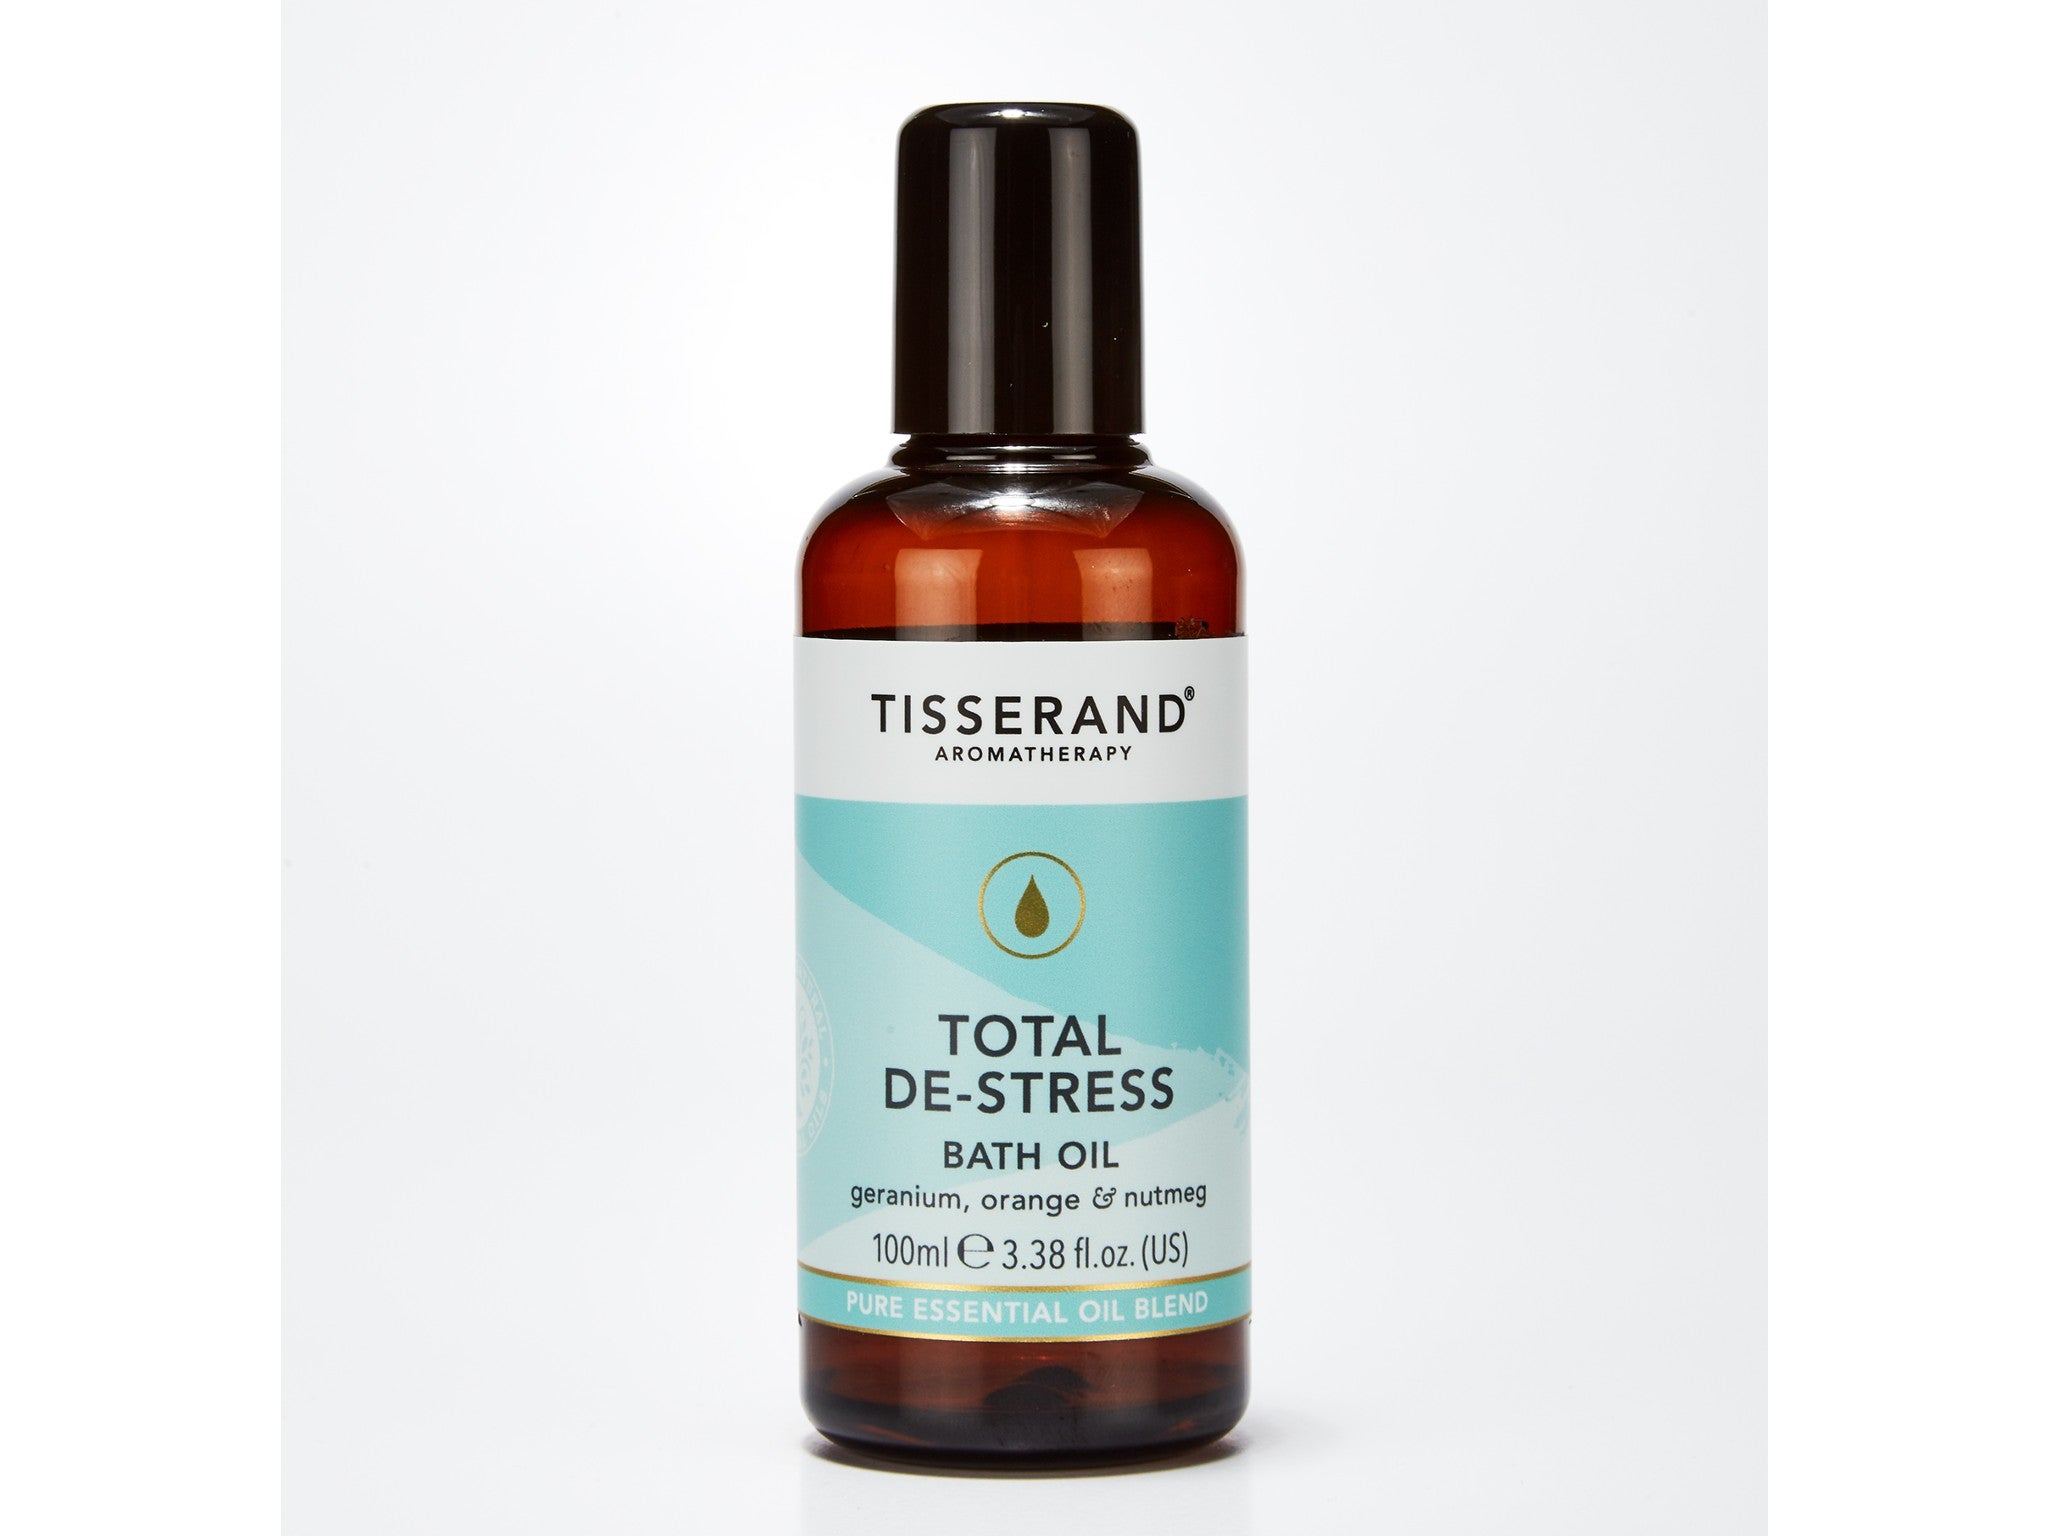 Tisserand total de-stress bath oil, 100ml indybest.jpeg